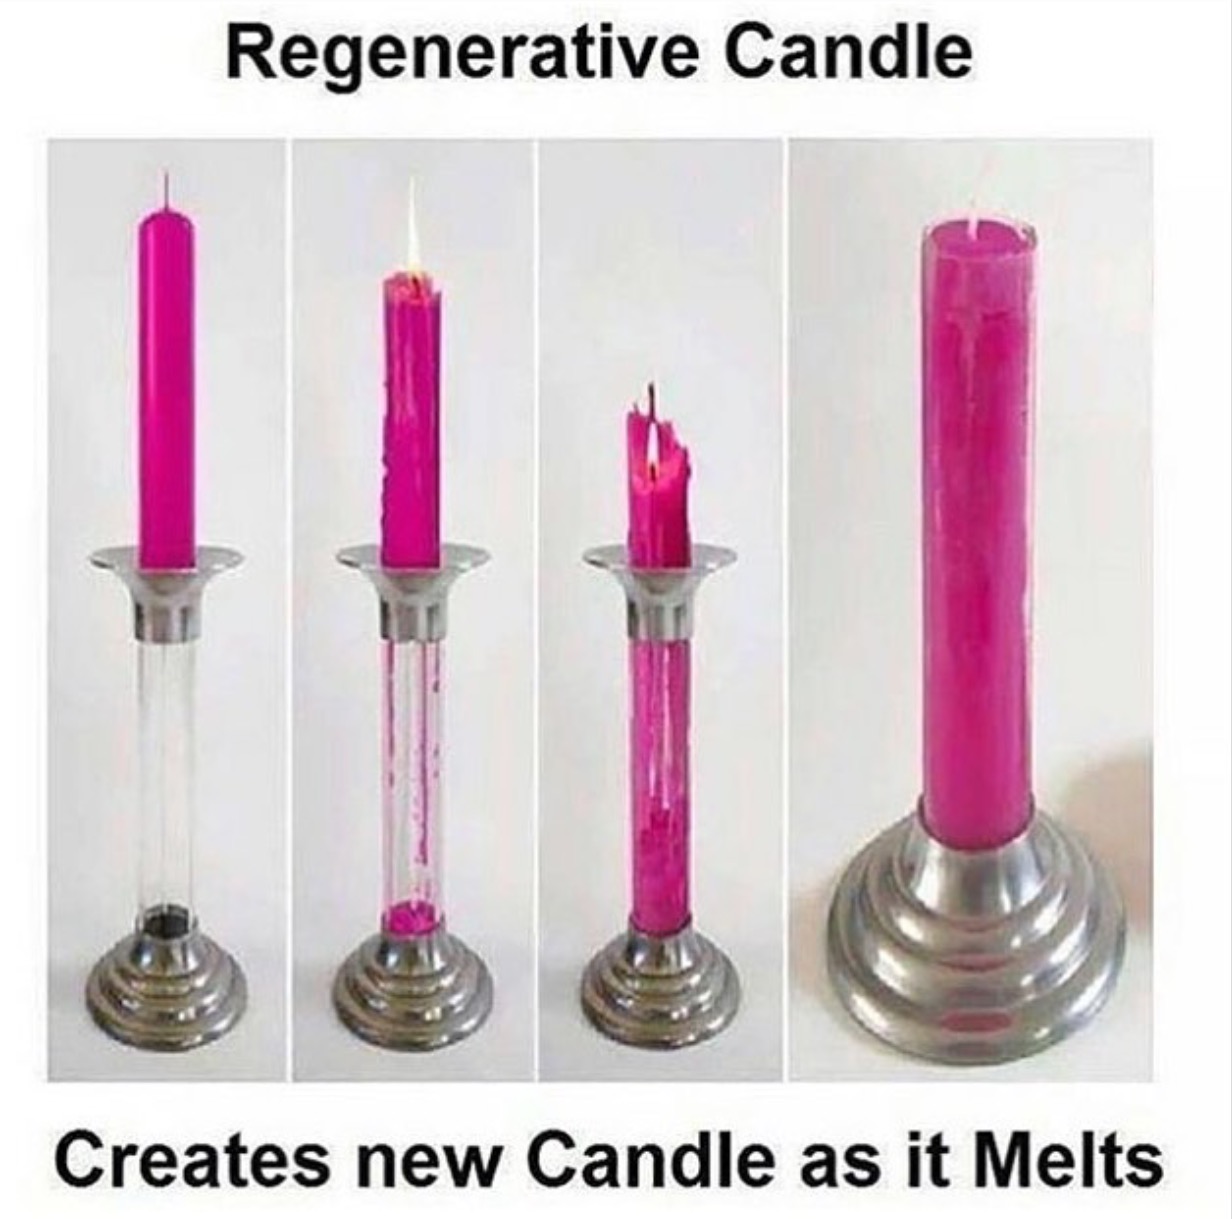 memes - regenerative candle - Regenerative Candle Creates new Candle as it Melts